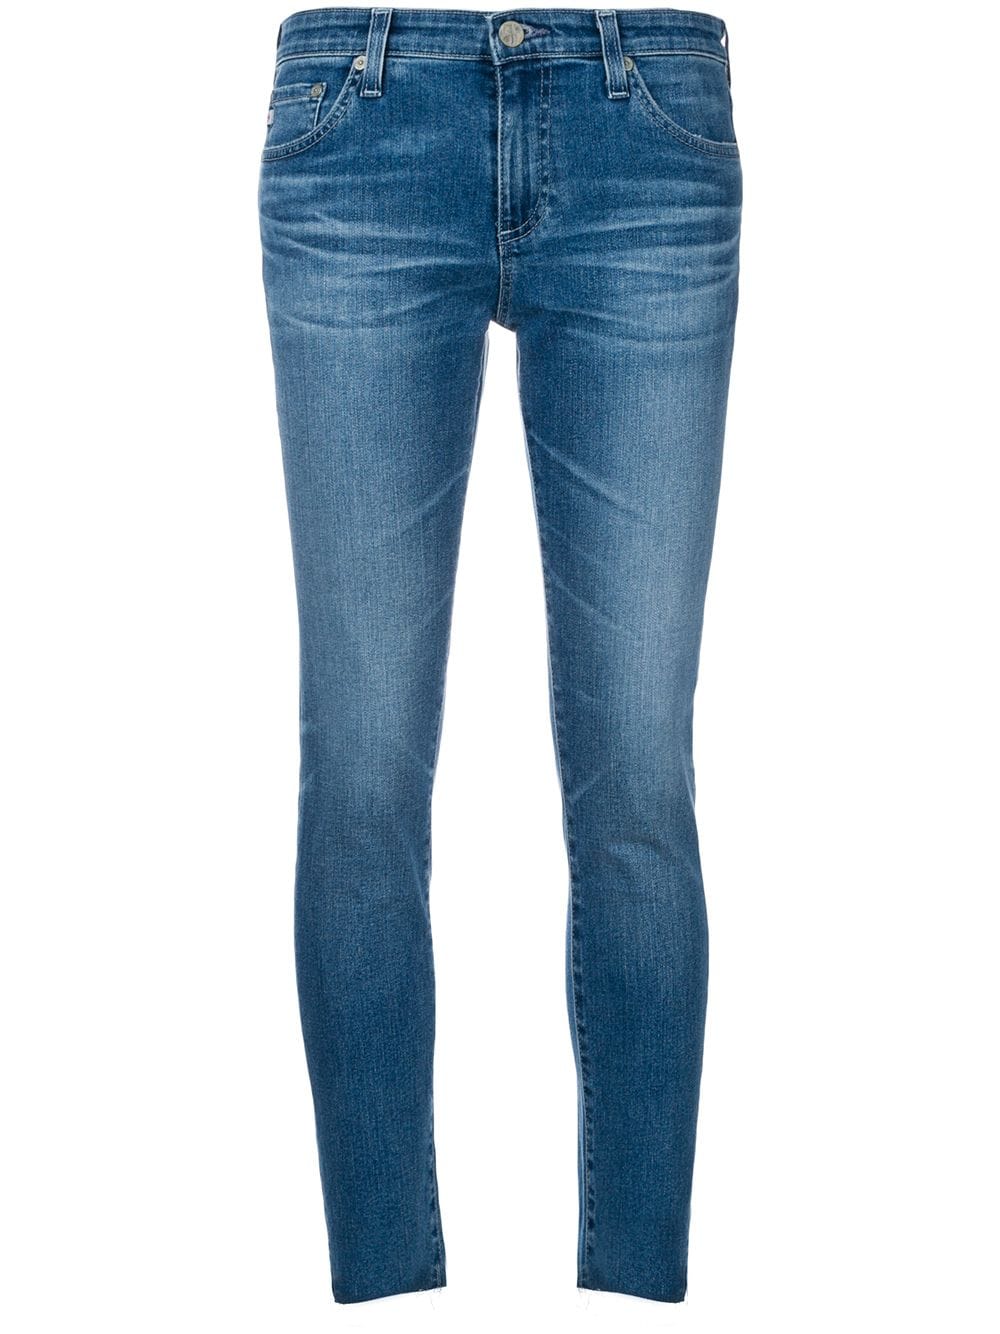 фото Ag jeans укороченные джинсы